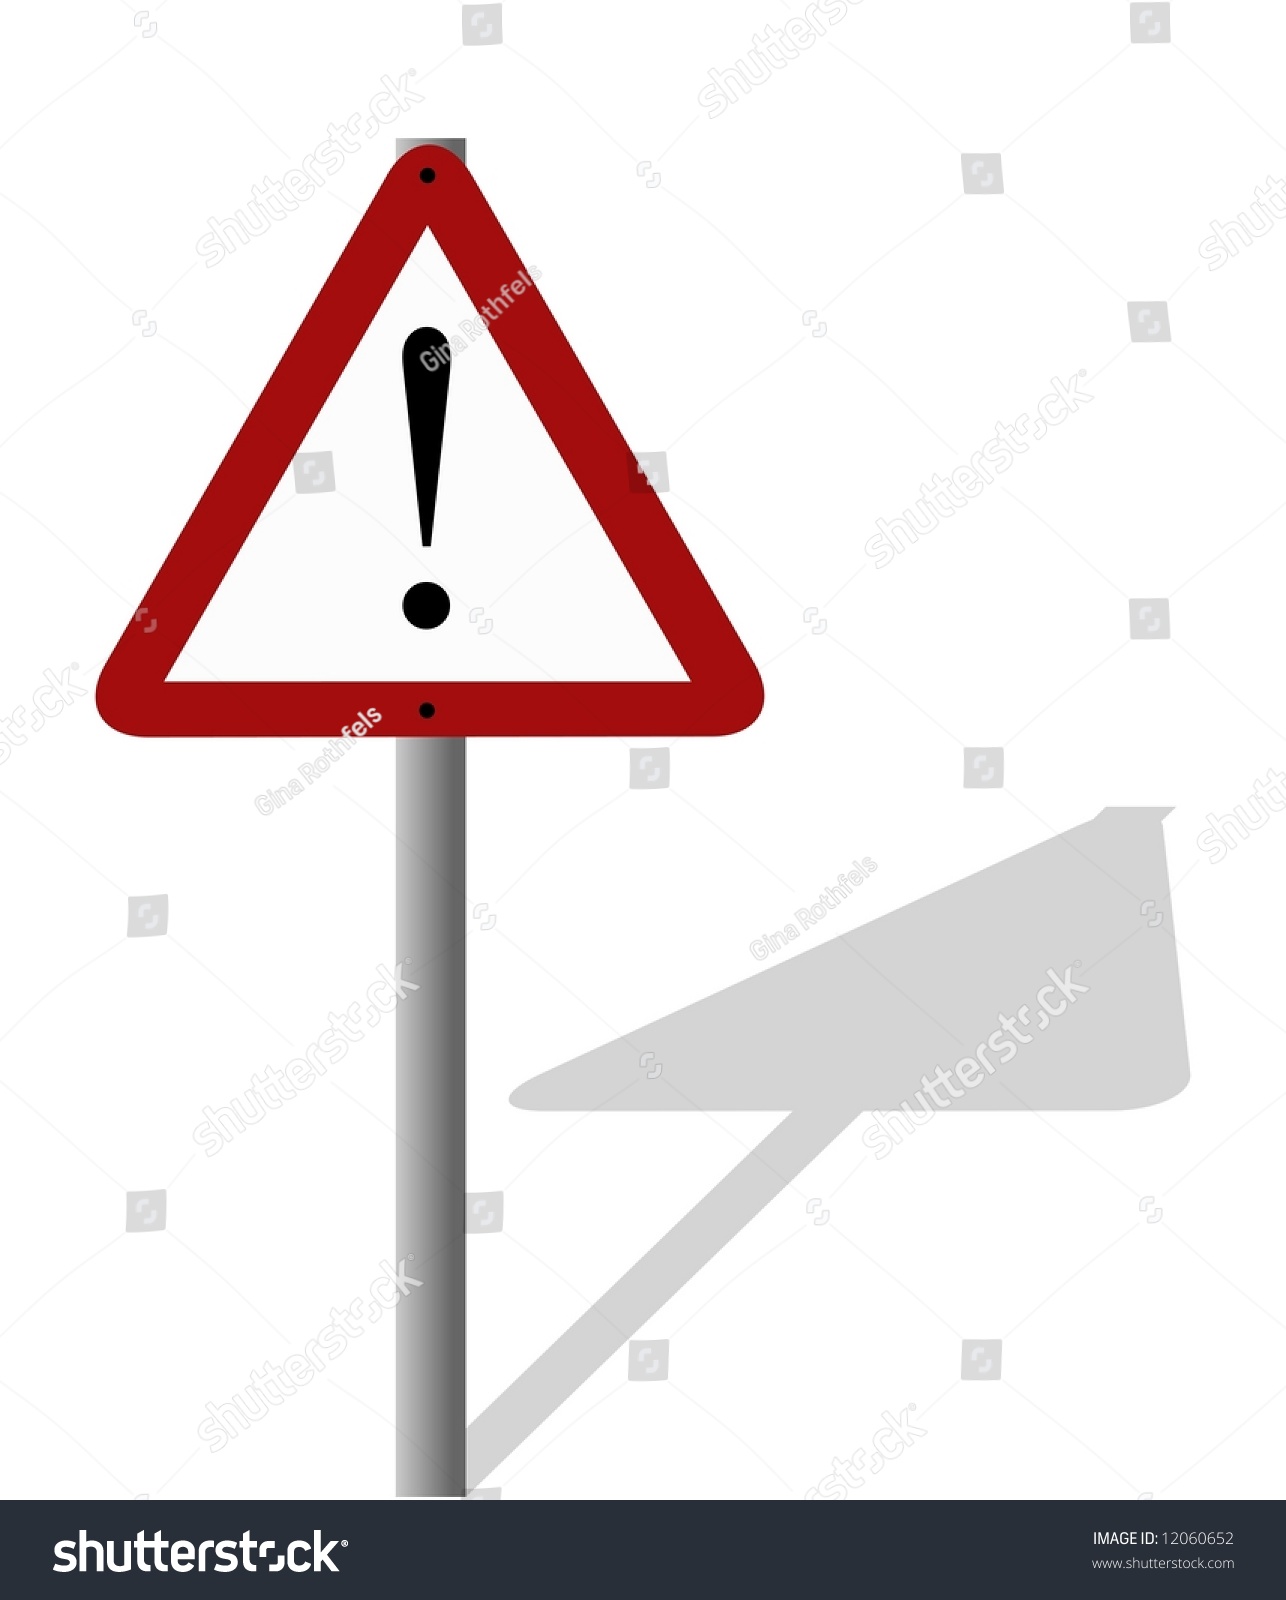 Triangular Road Sign Exclamation Mark Warning Stock Illustration ...